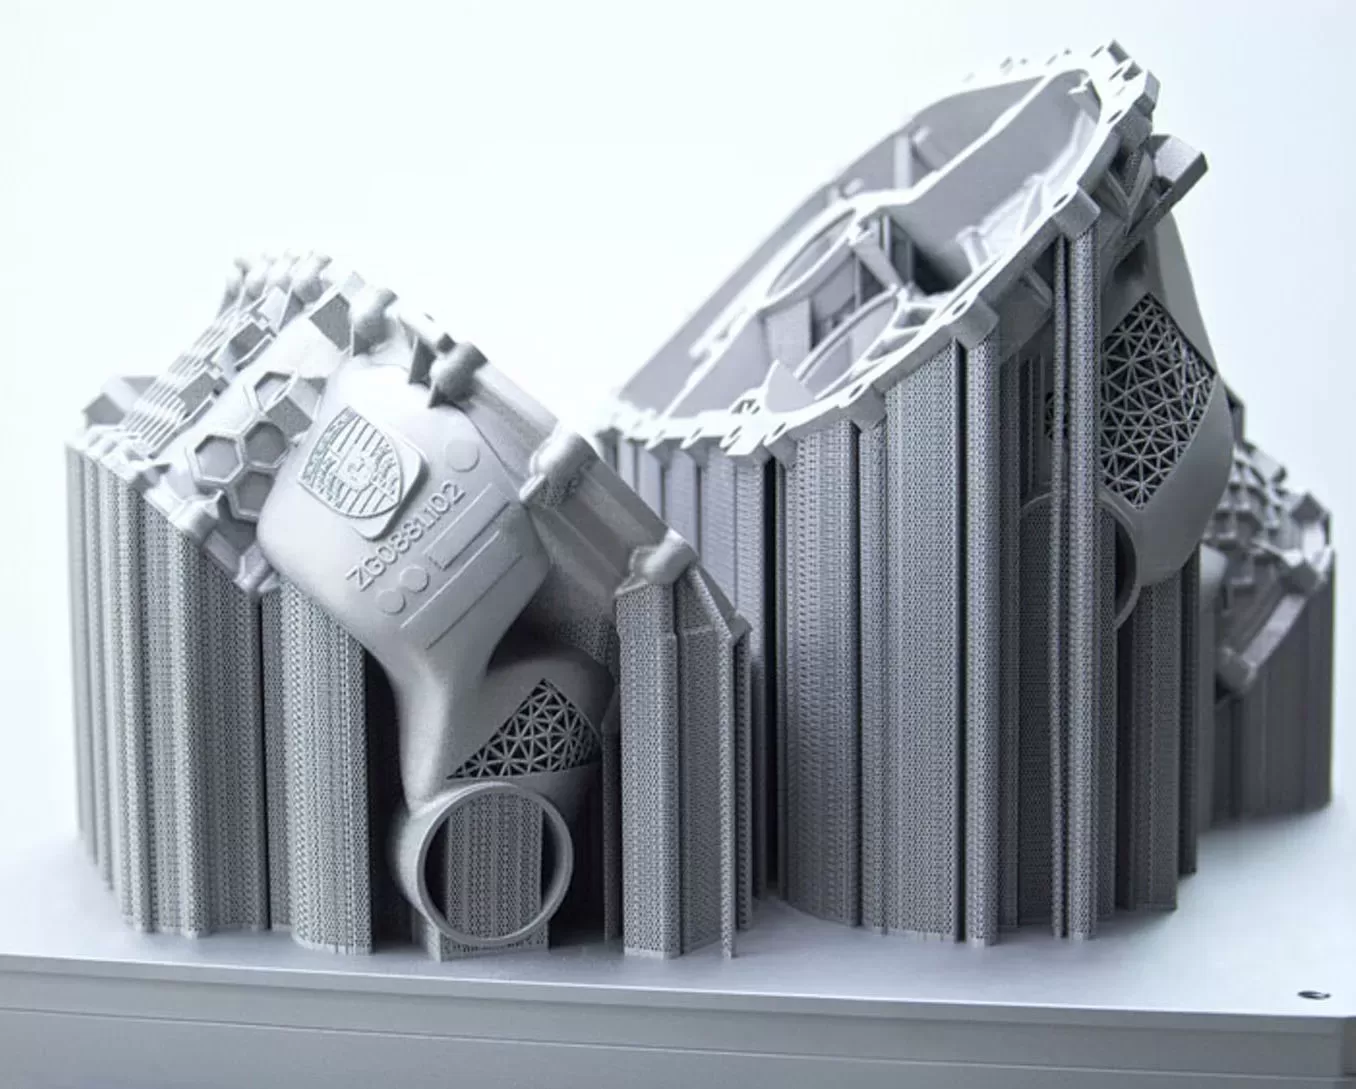 3D printed prototype